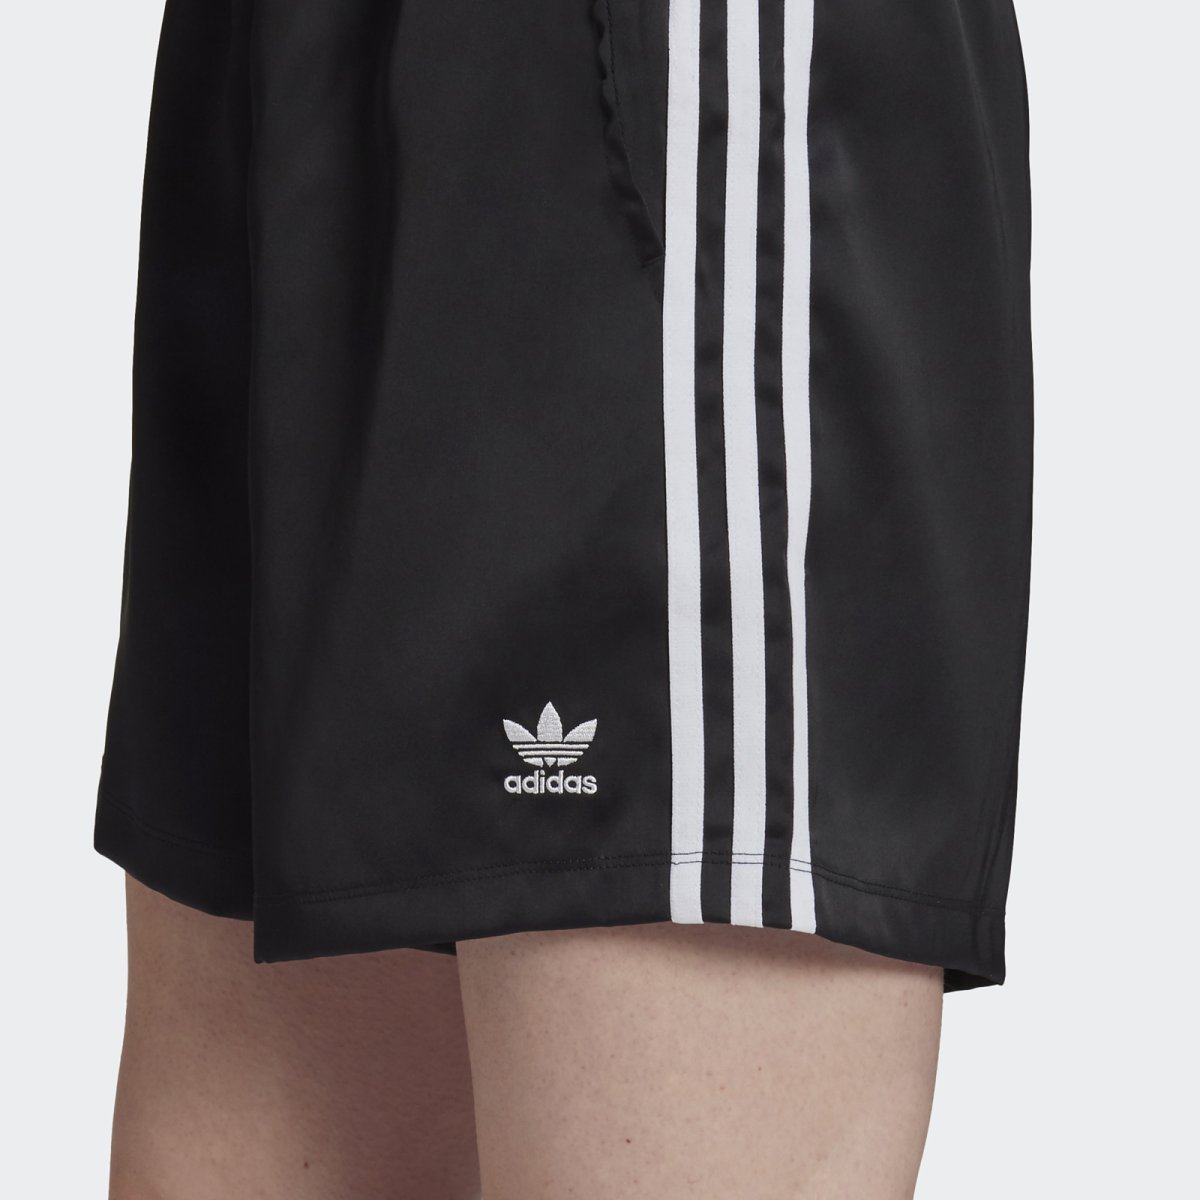 Adidas Originals logo шорты